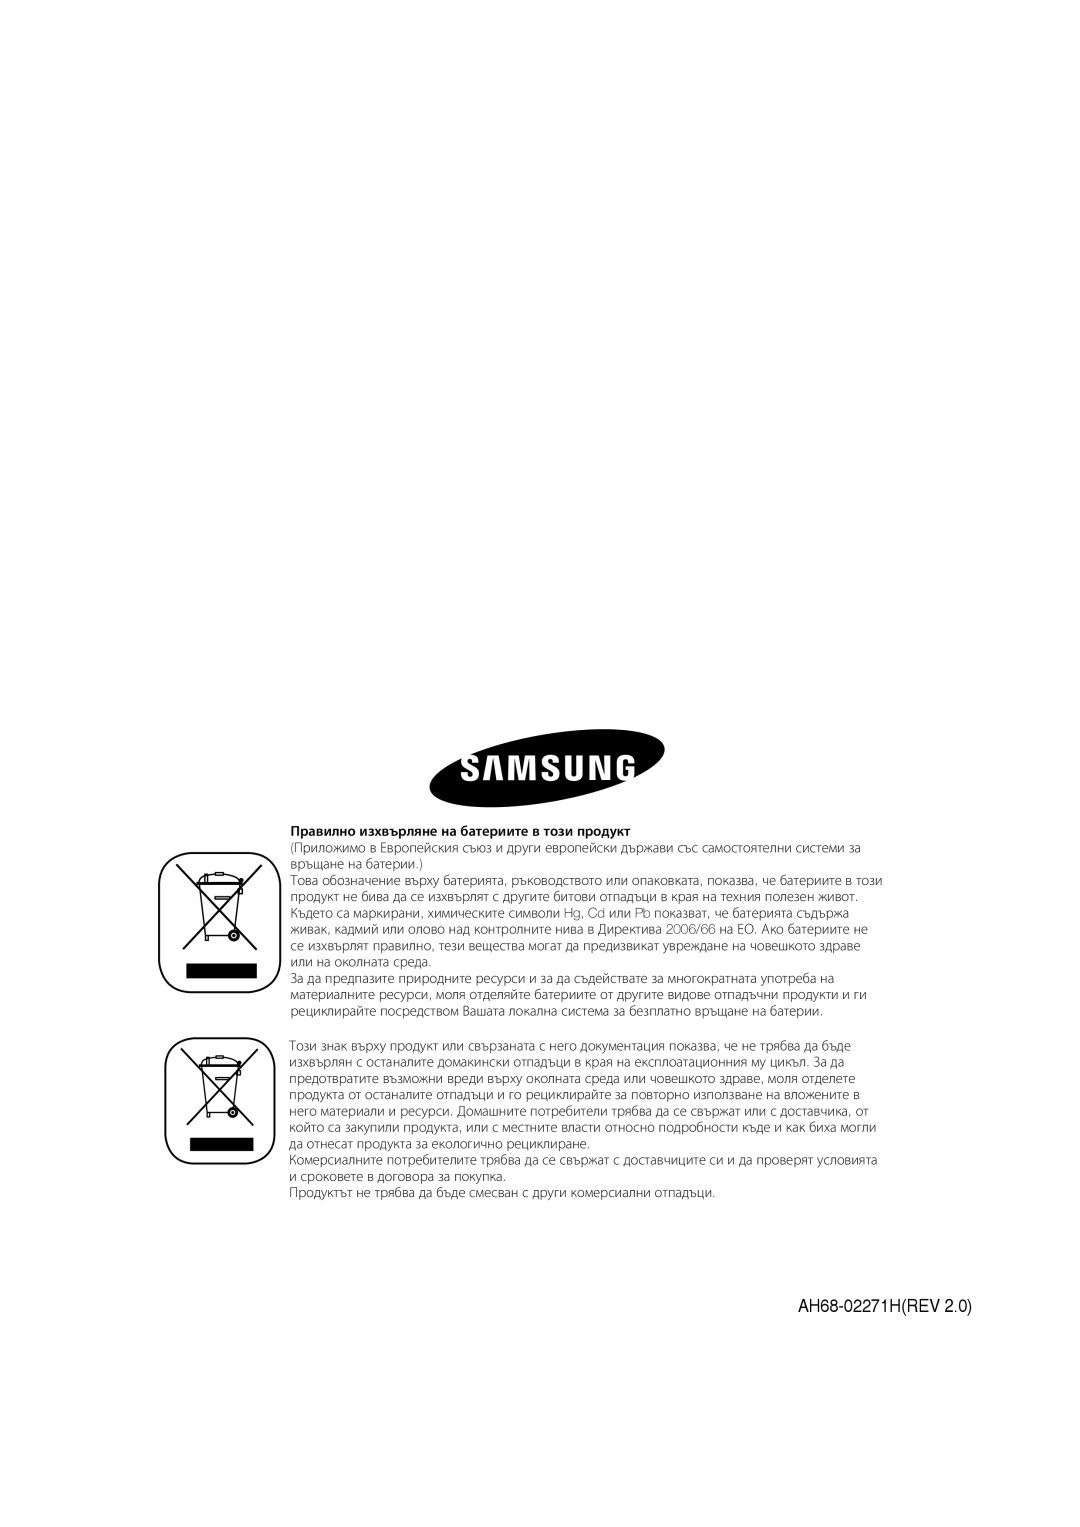 Samsung MM-C330D/EDC manual AH68-02271HREV 